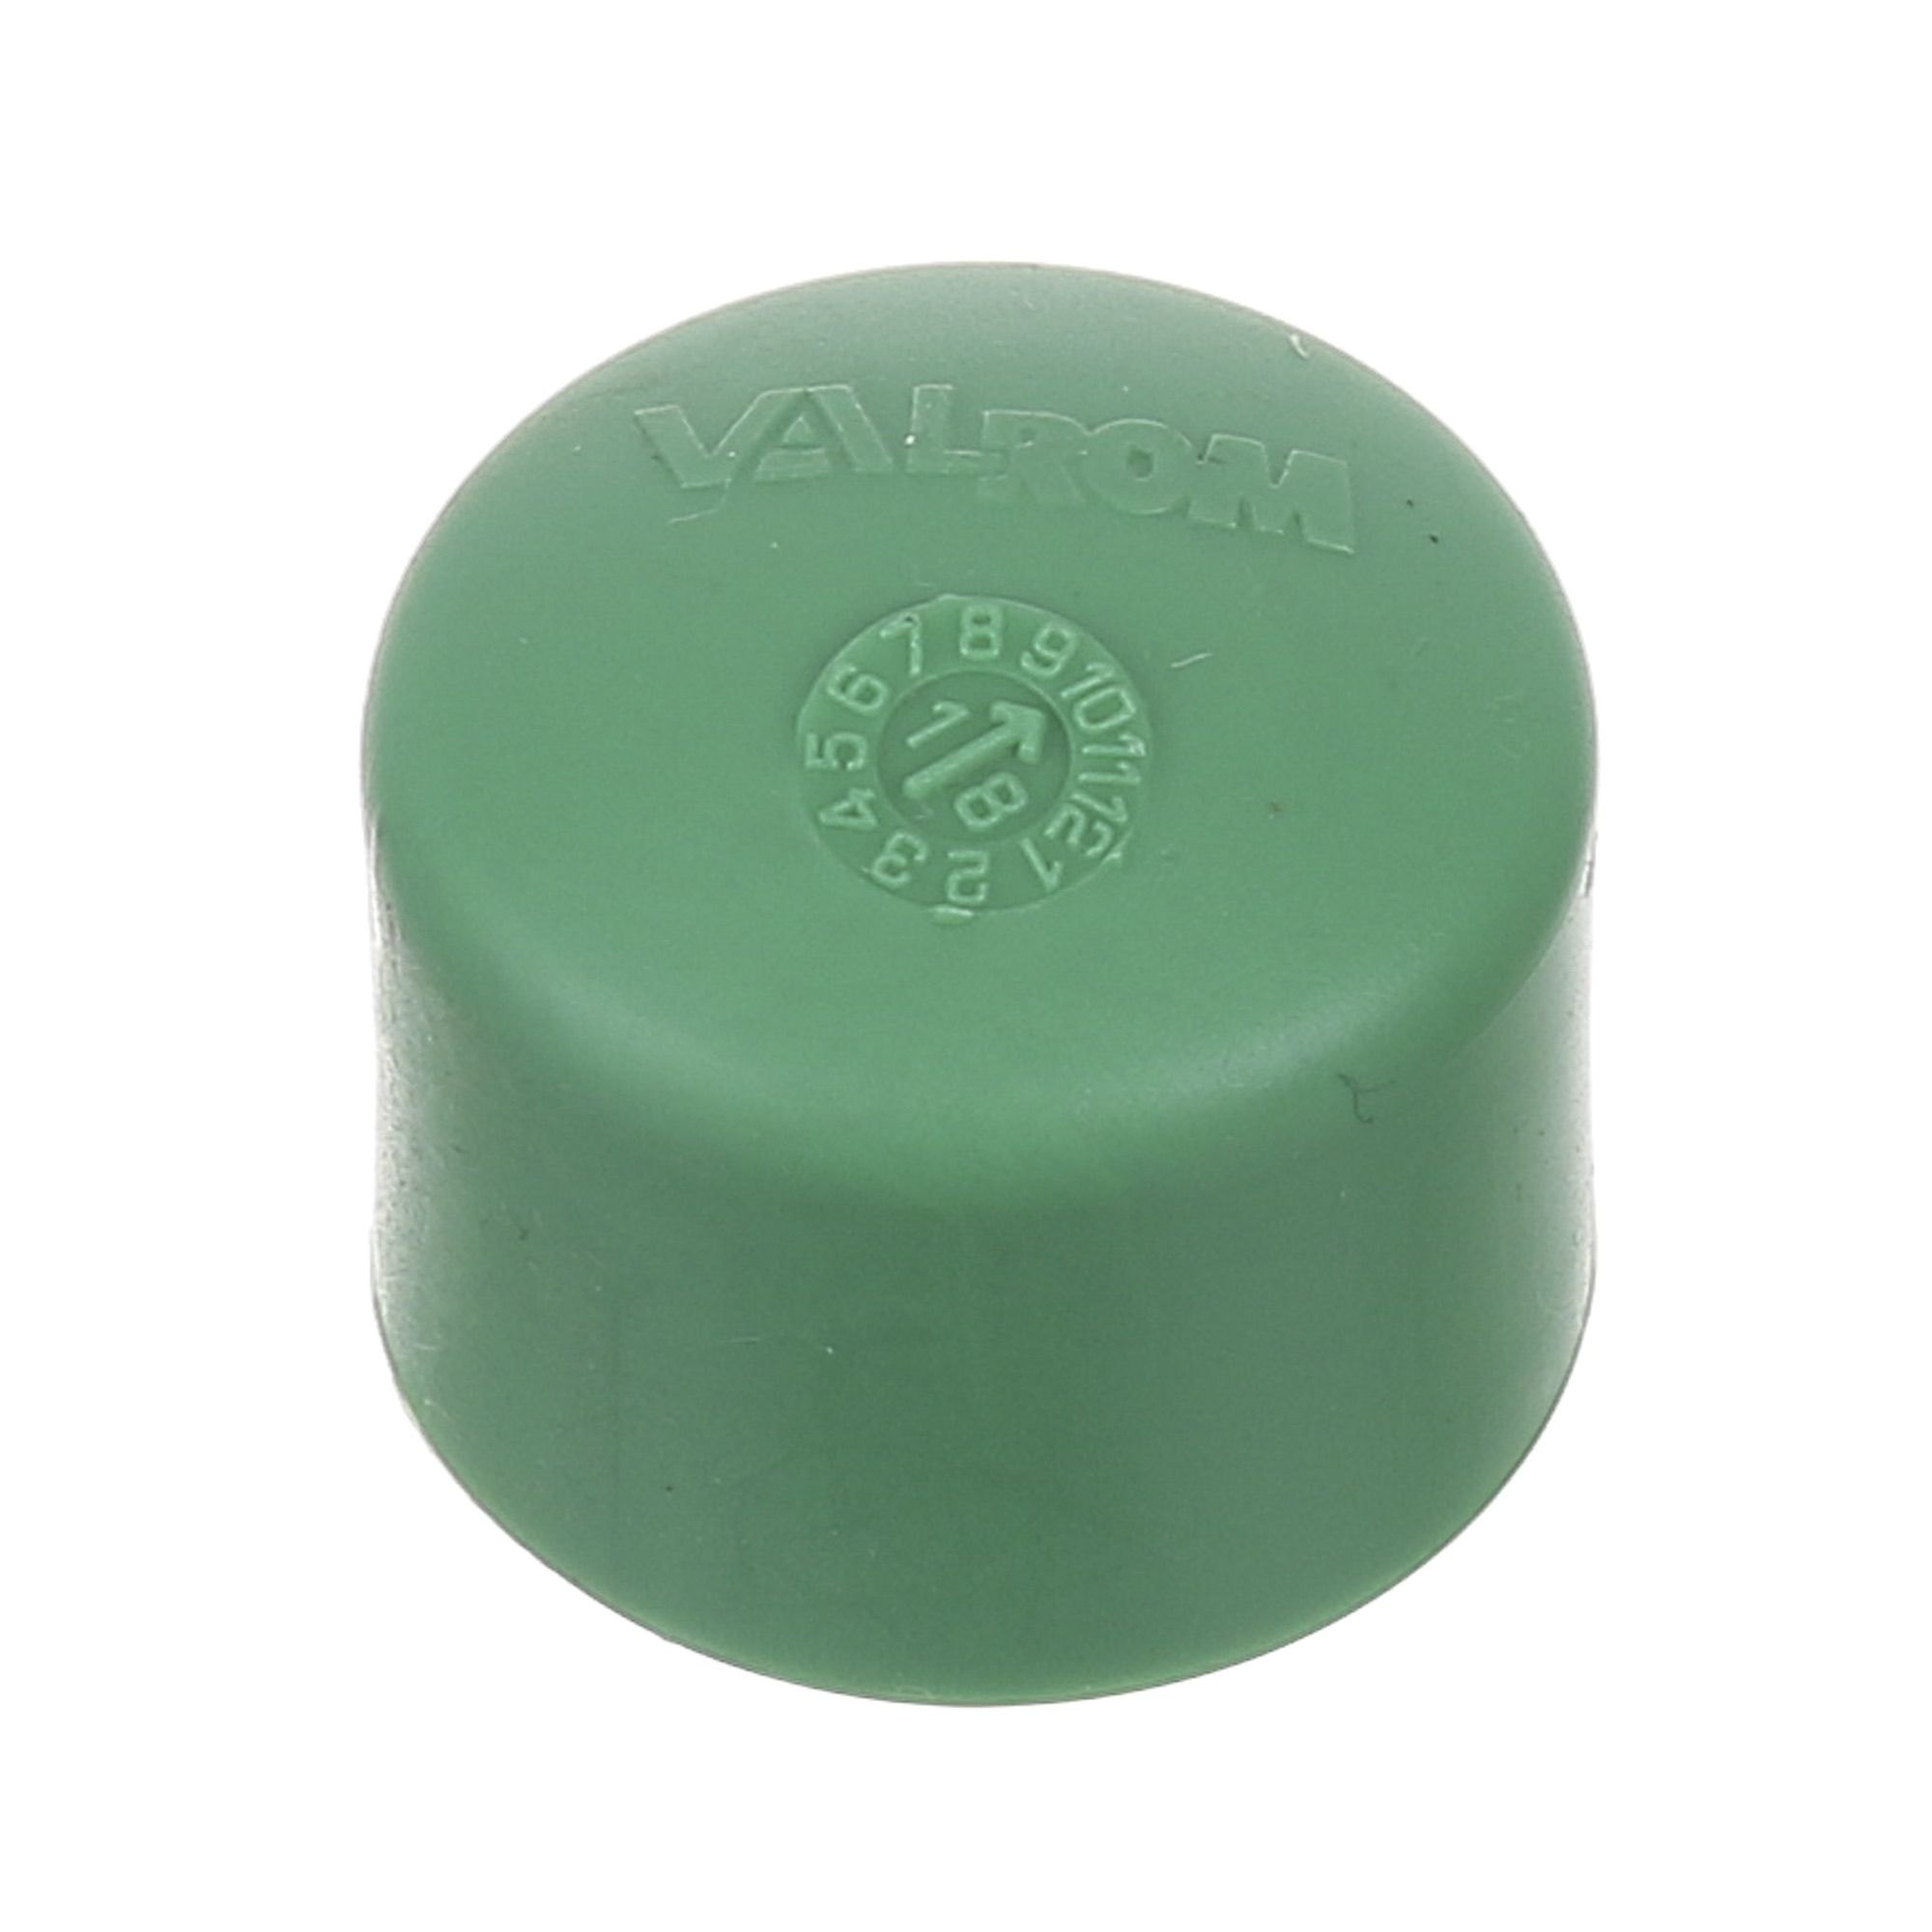 Dop Valrom din PPR de 20 mm culoare verde